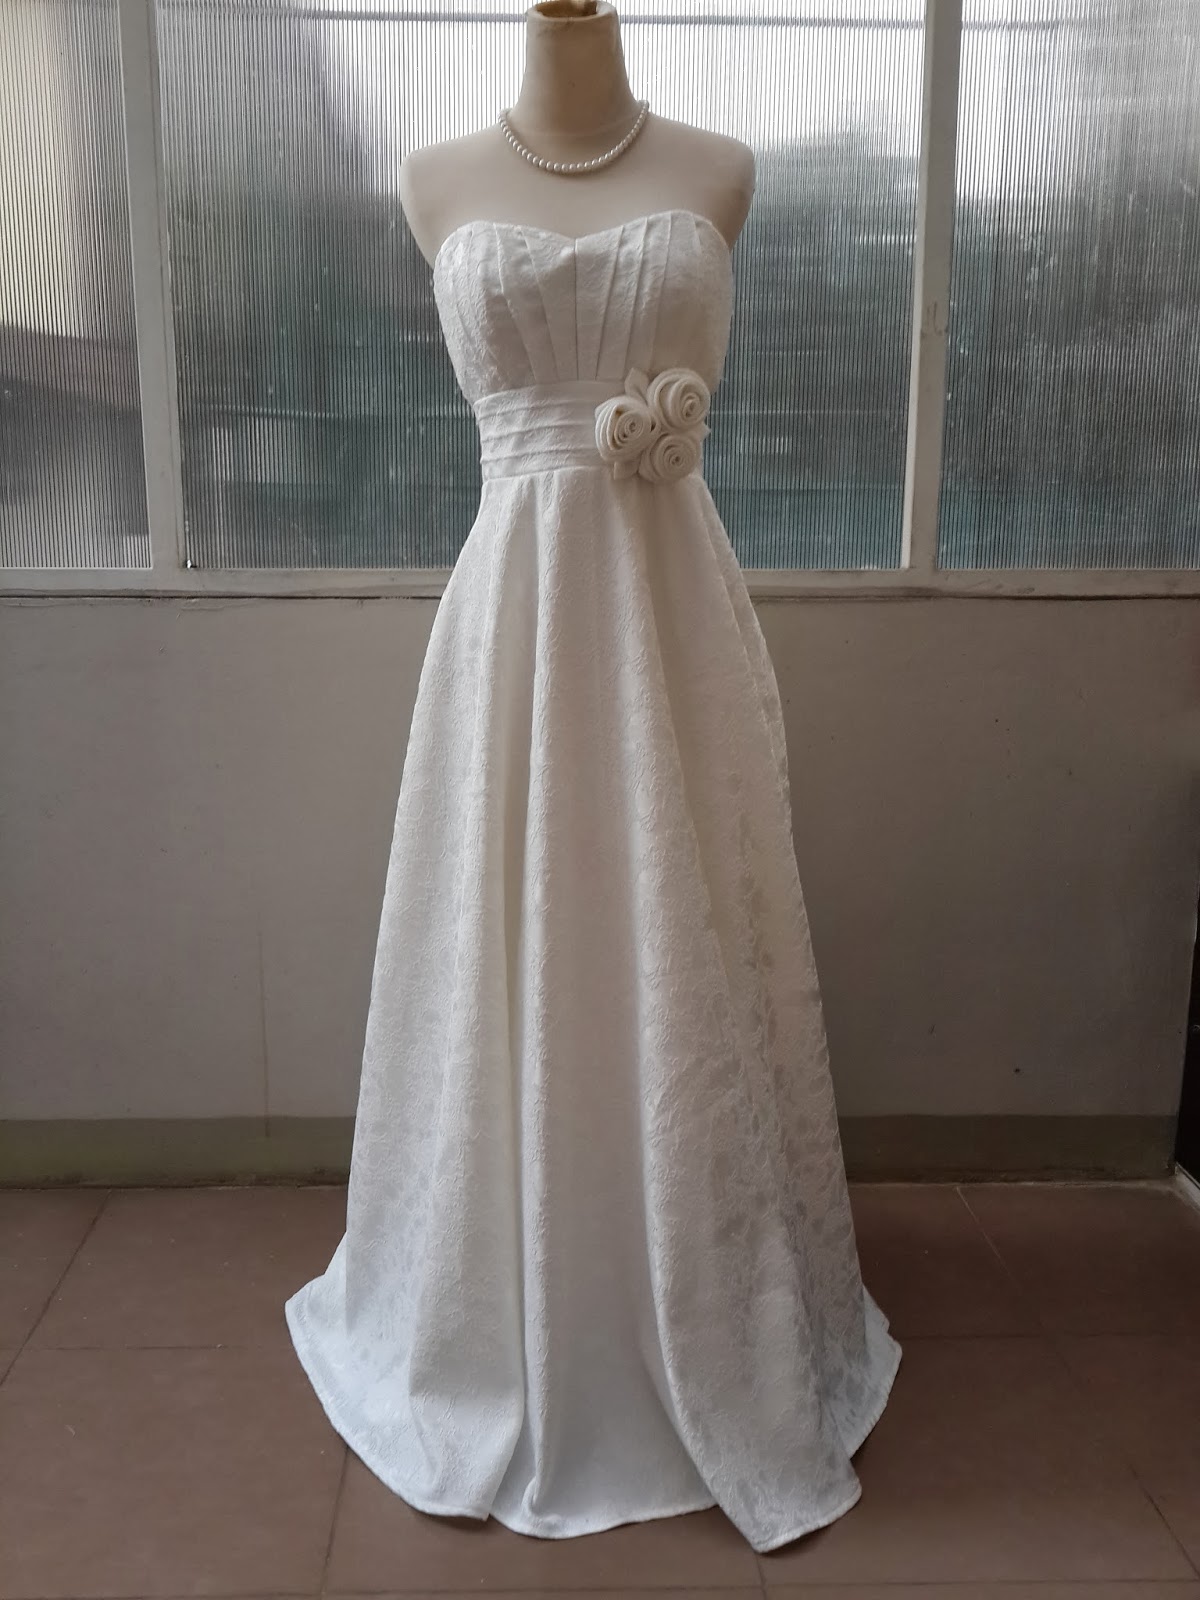 Sewa Gaun Pesta Wedding Dress Simple by Butik Sewa Gaun 